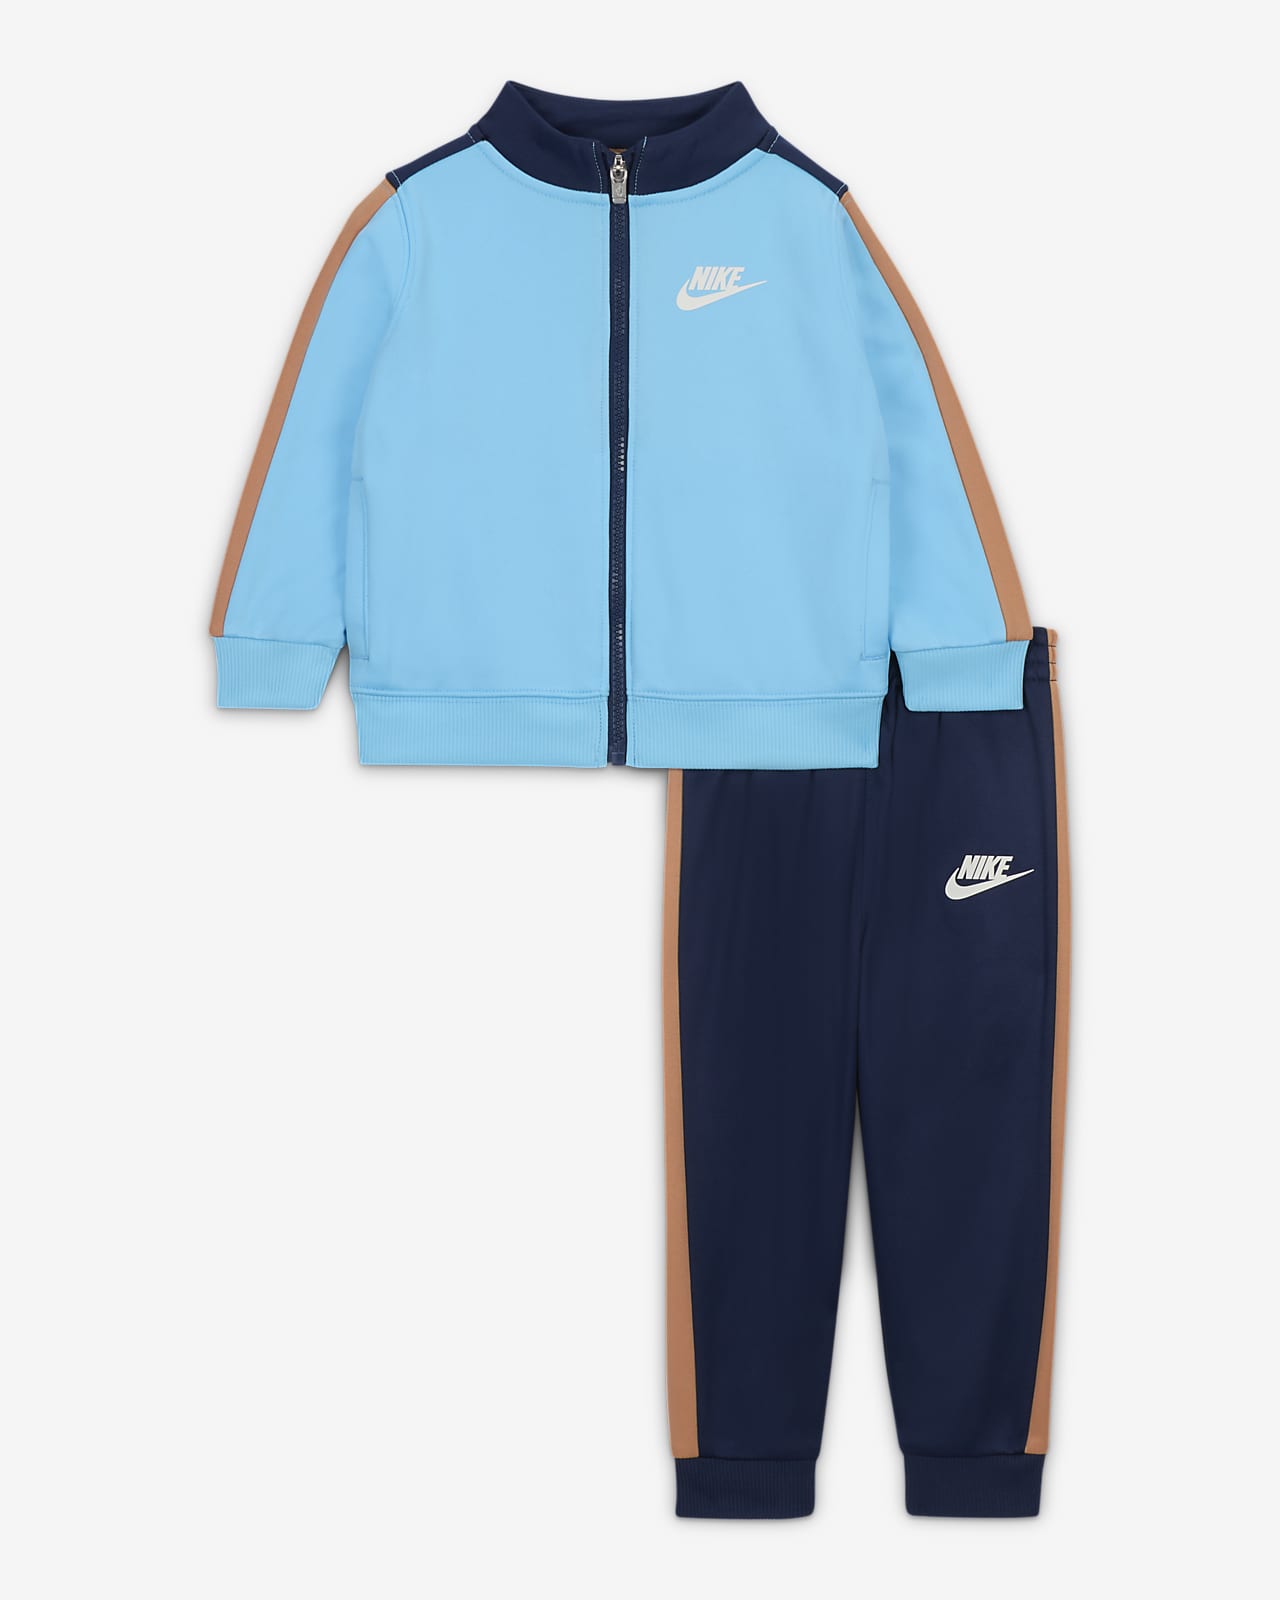 Nike Sportswear Dri-FIT Baby (12-24M) Tricot Set